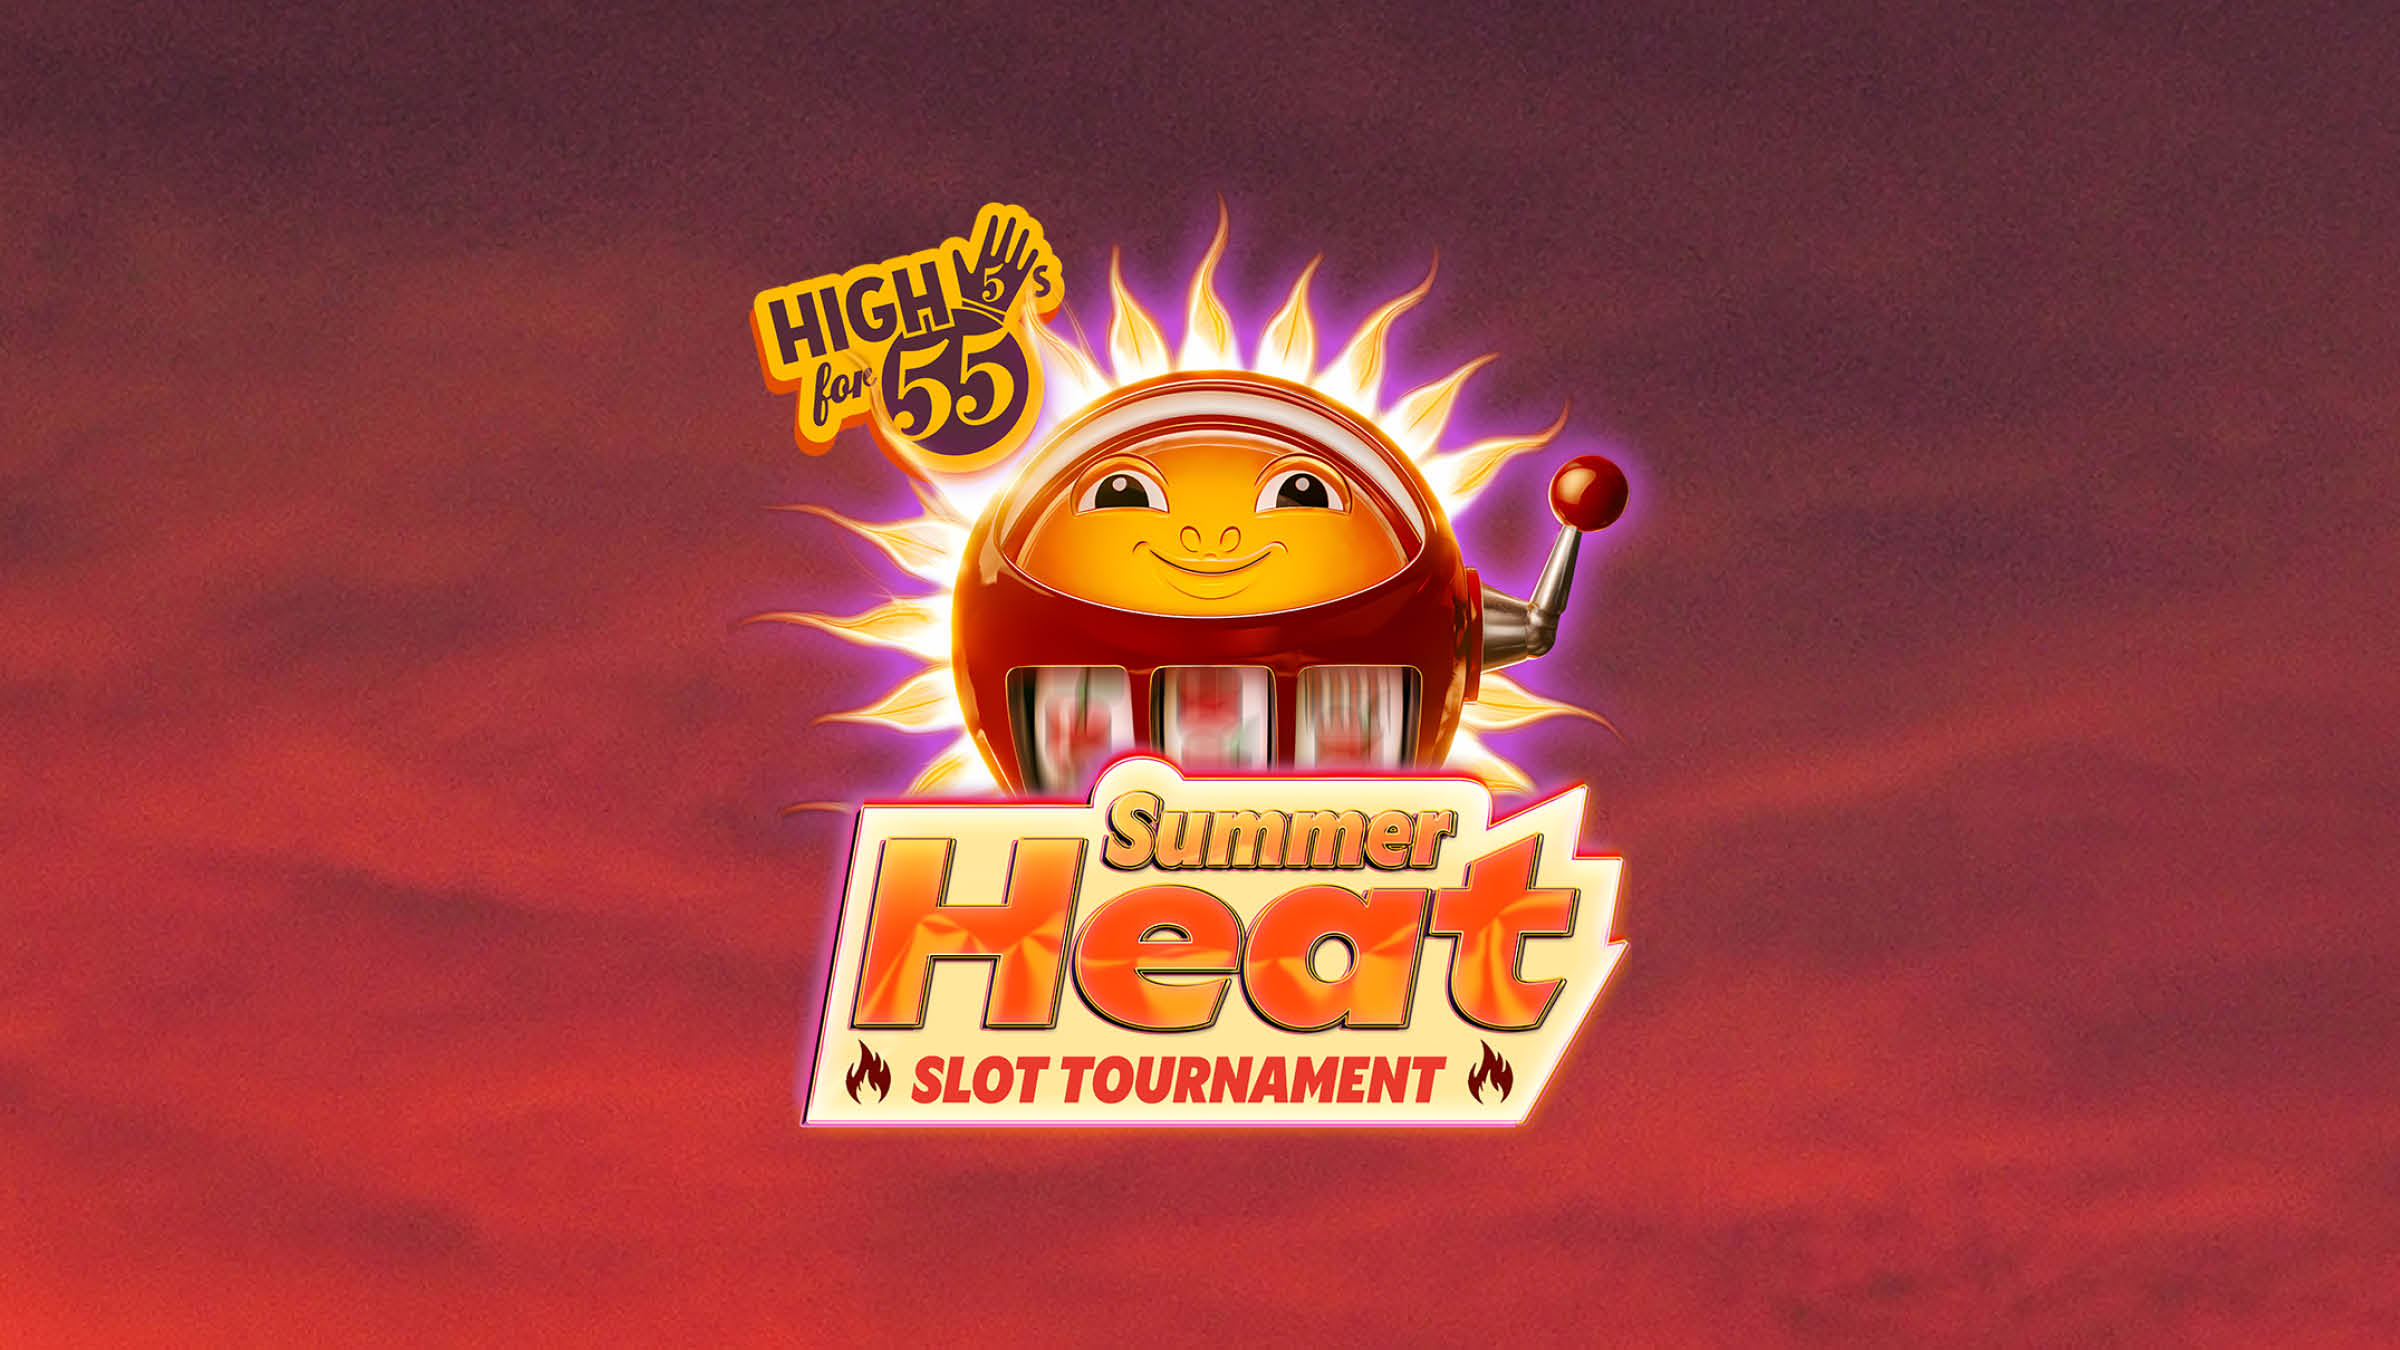 High 5s for 55’s – SUMMER HEAT SLOT TOURNAMENT